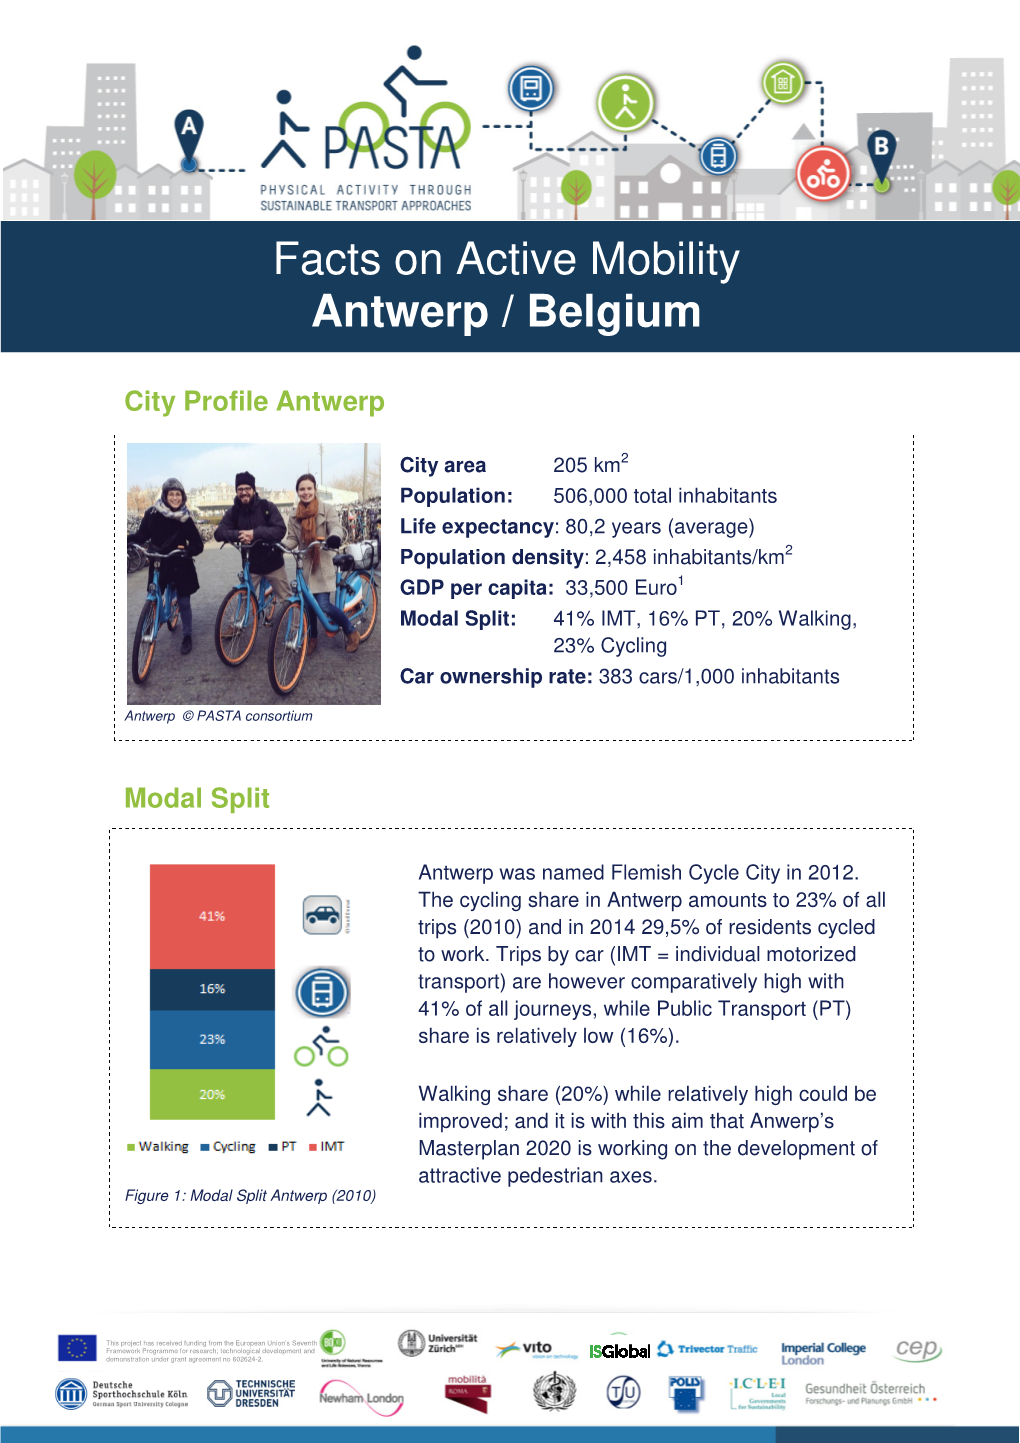 Facts on Active Mobility Antwerp / Belgium